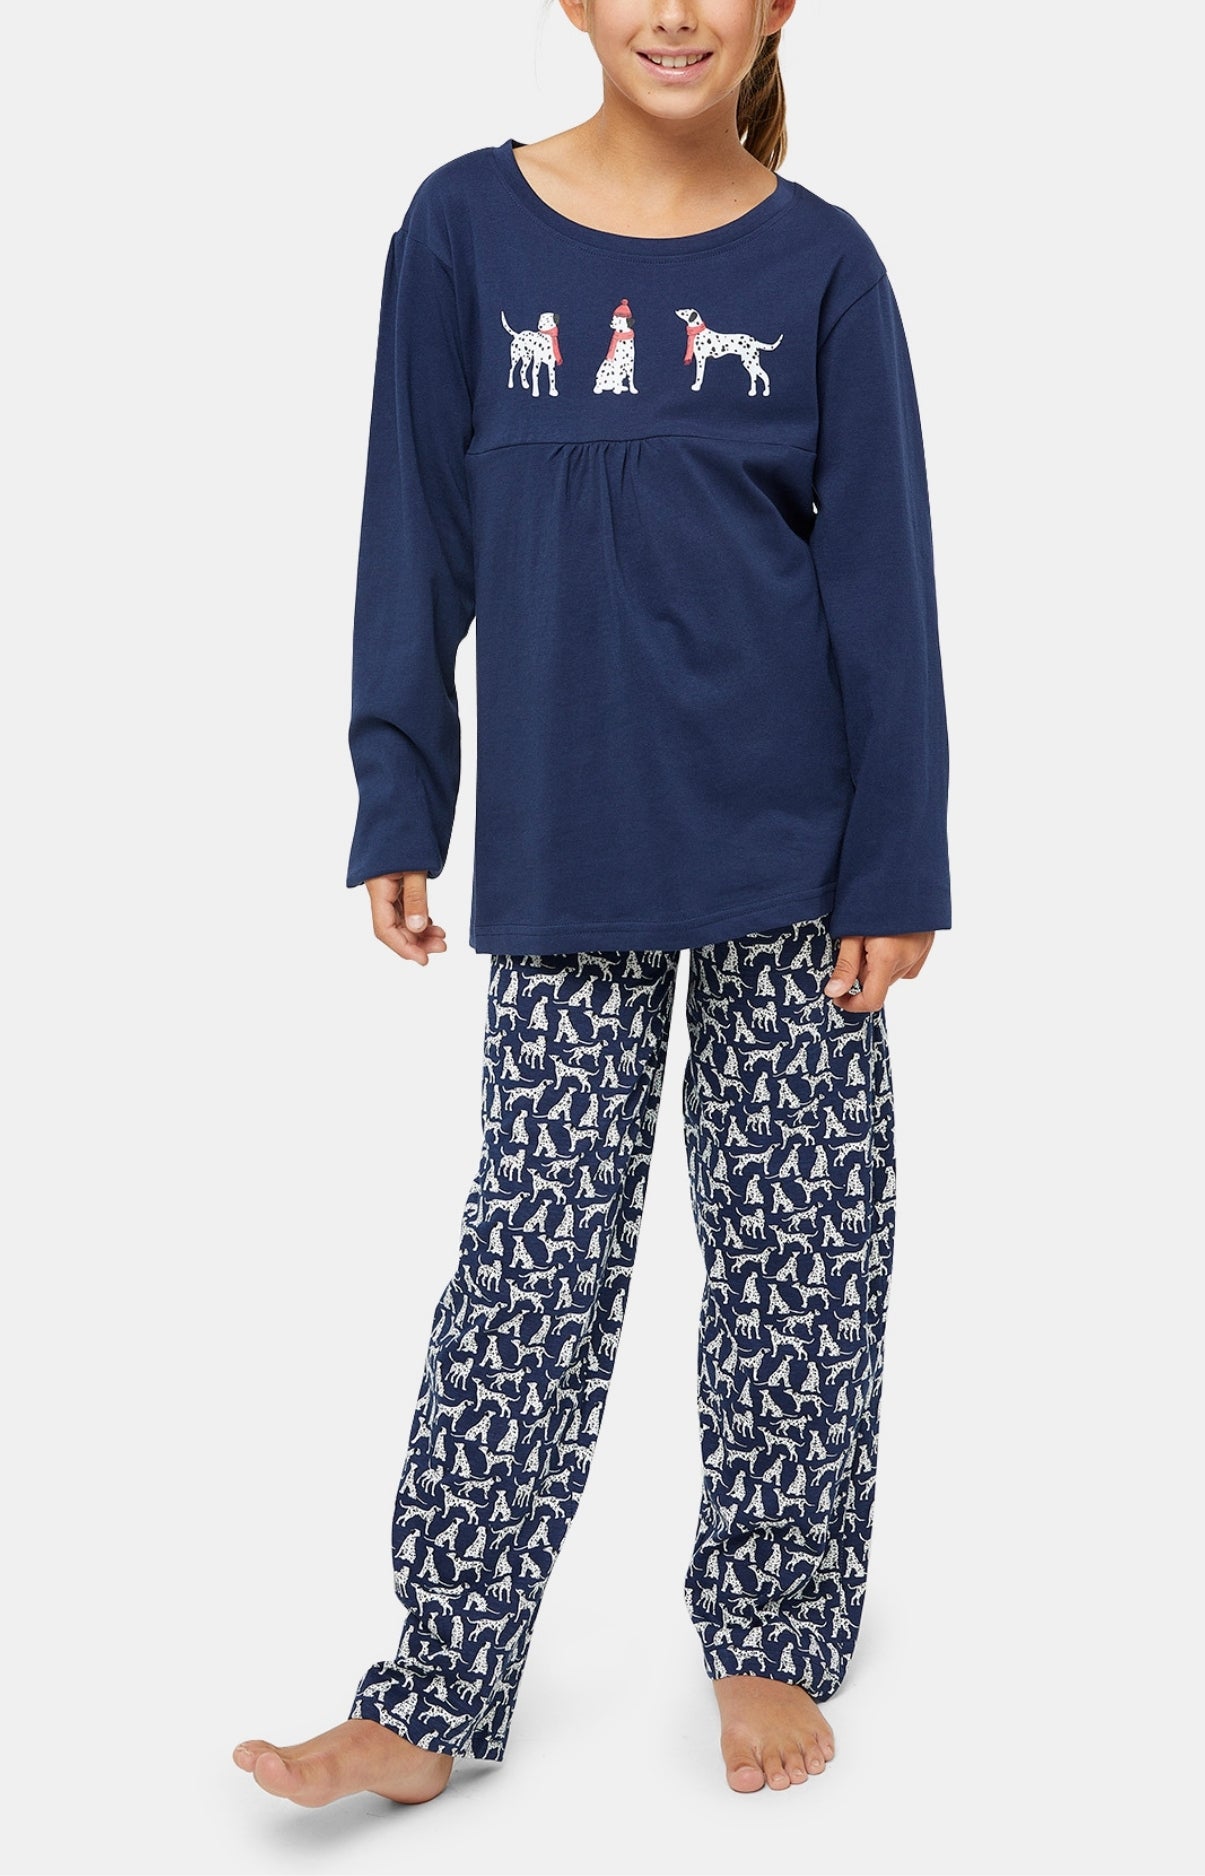 Child Pyjama - Dalmatian